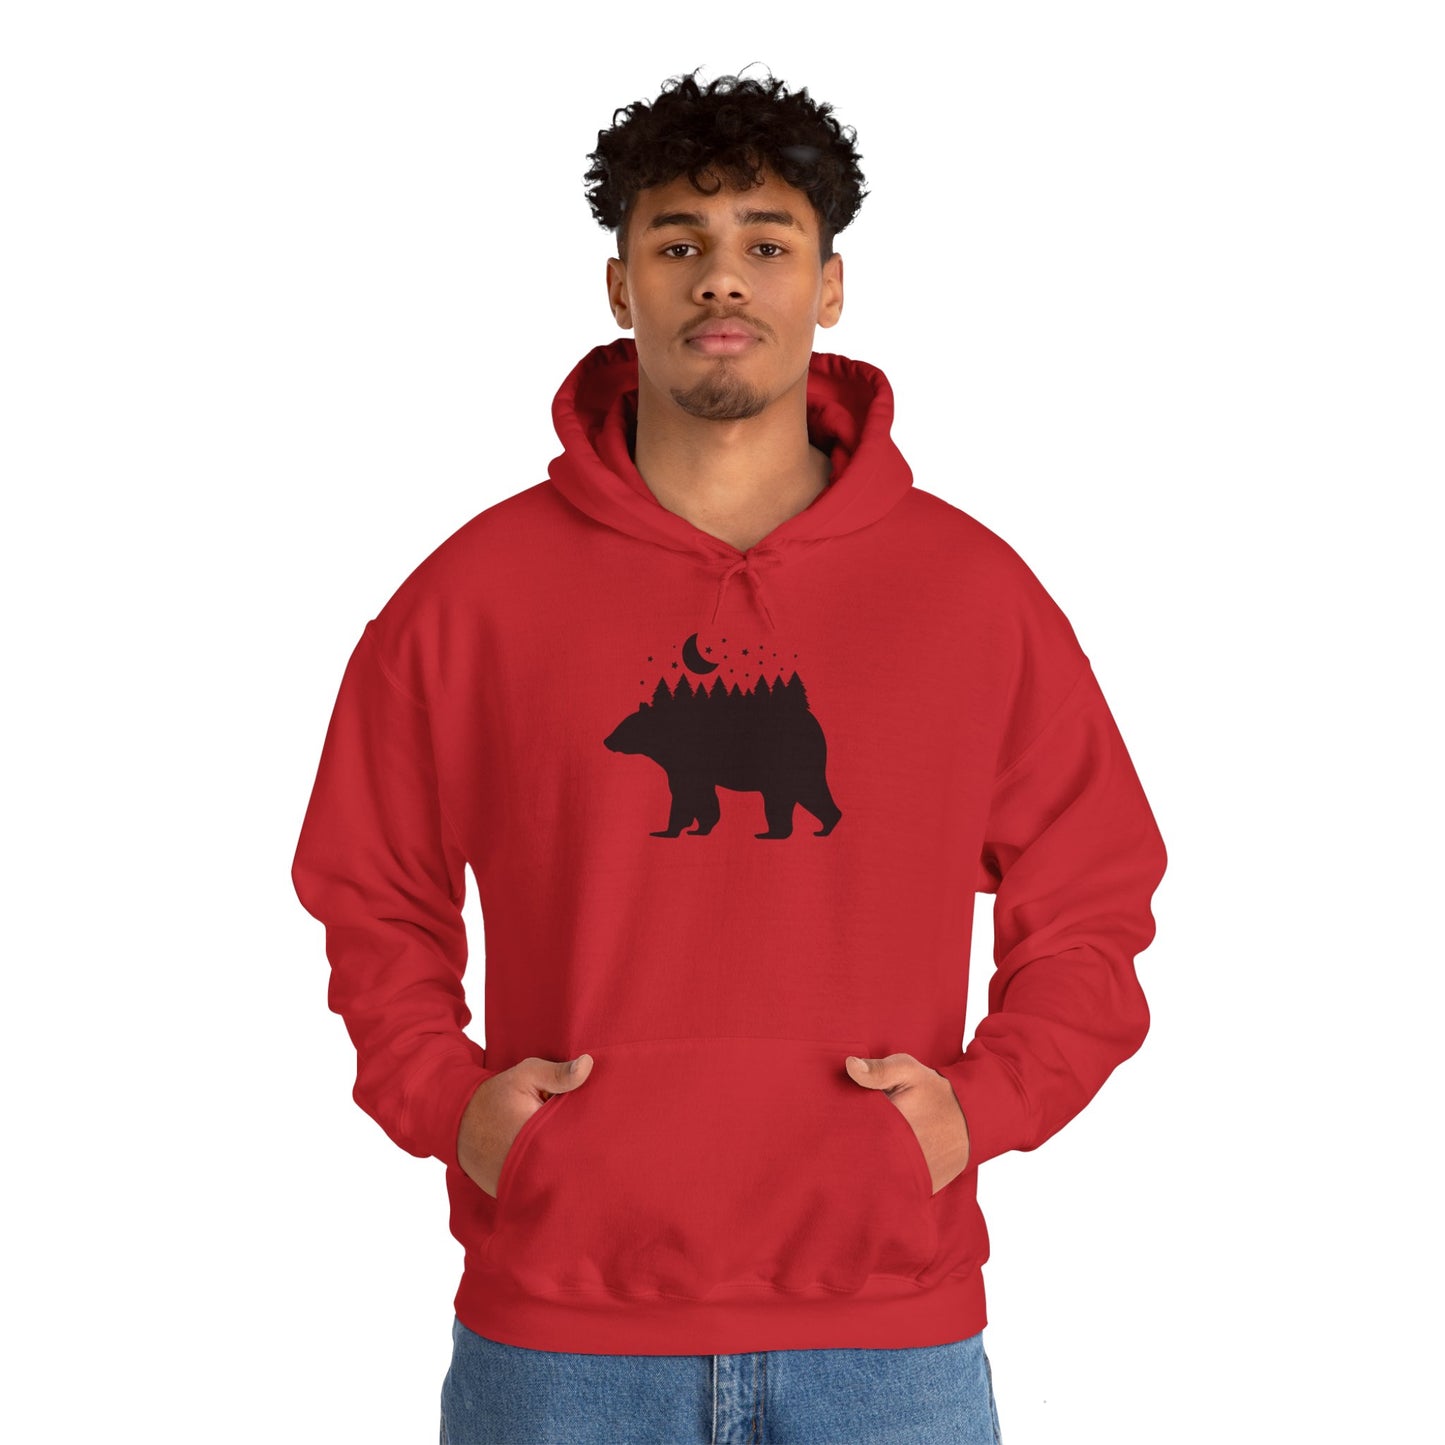 Bear and Stars Hooded Sweatshirt (Unisex)